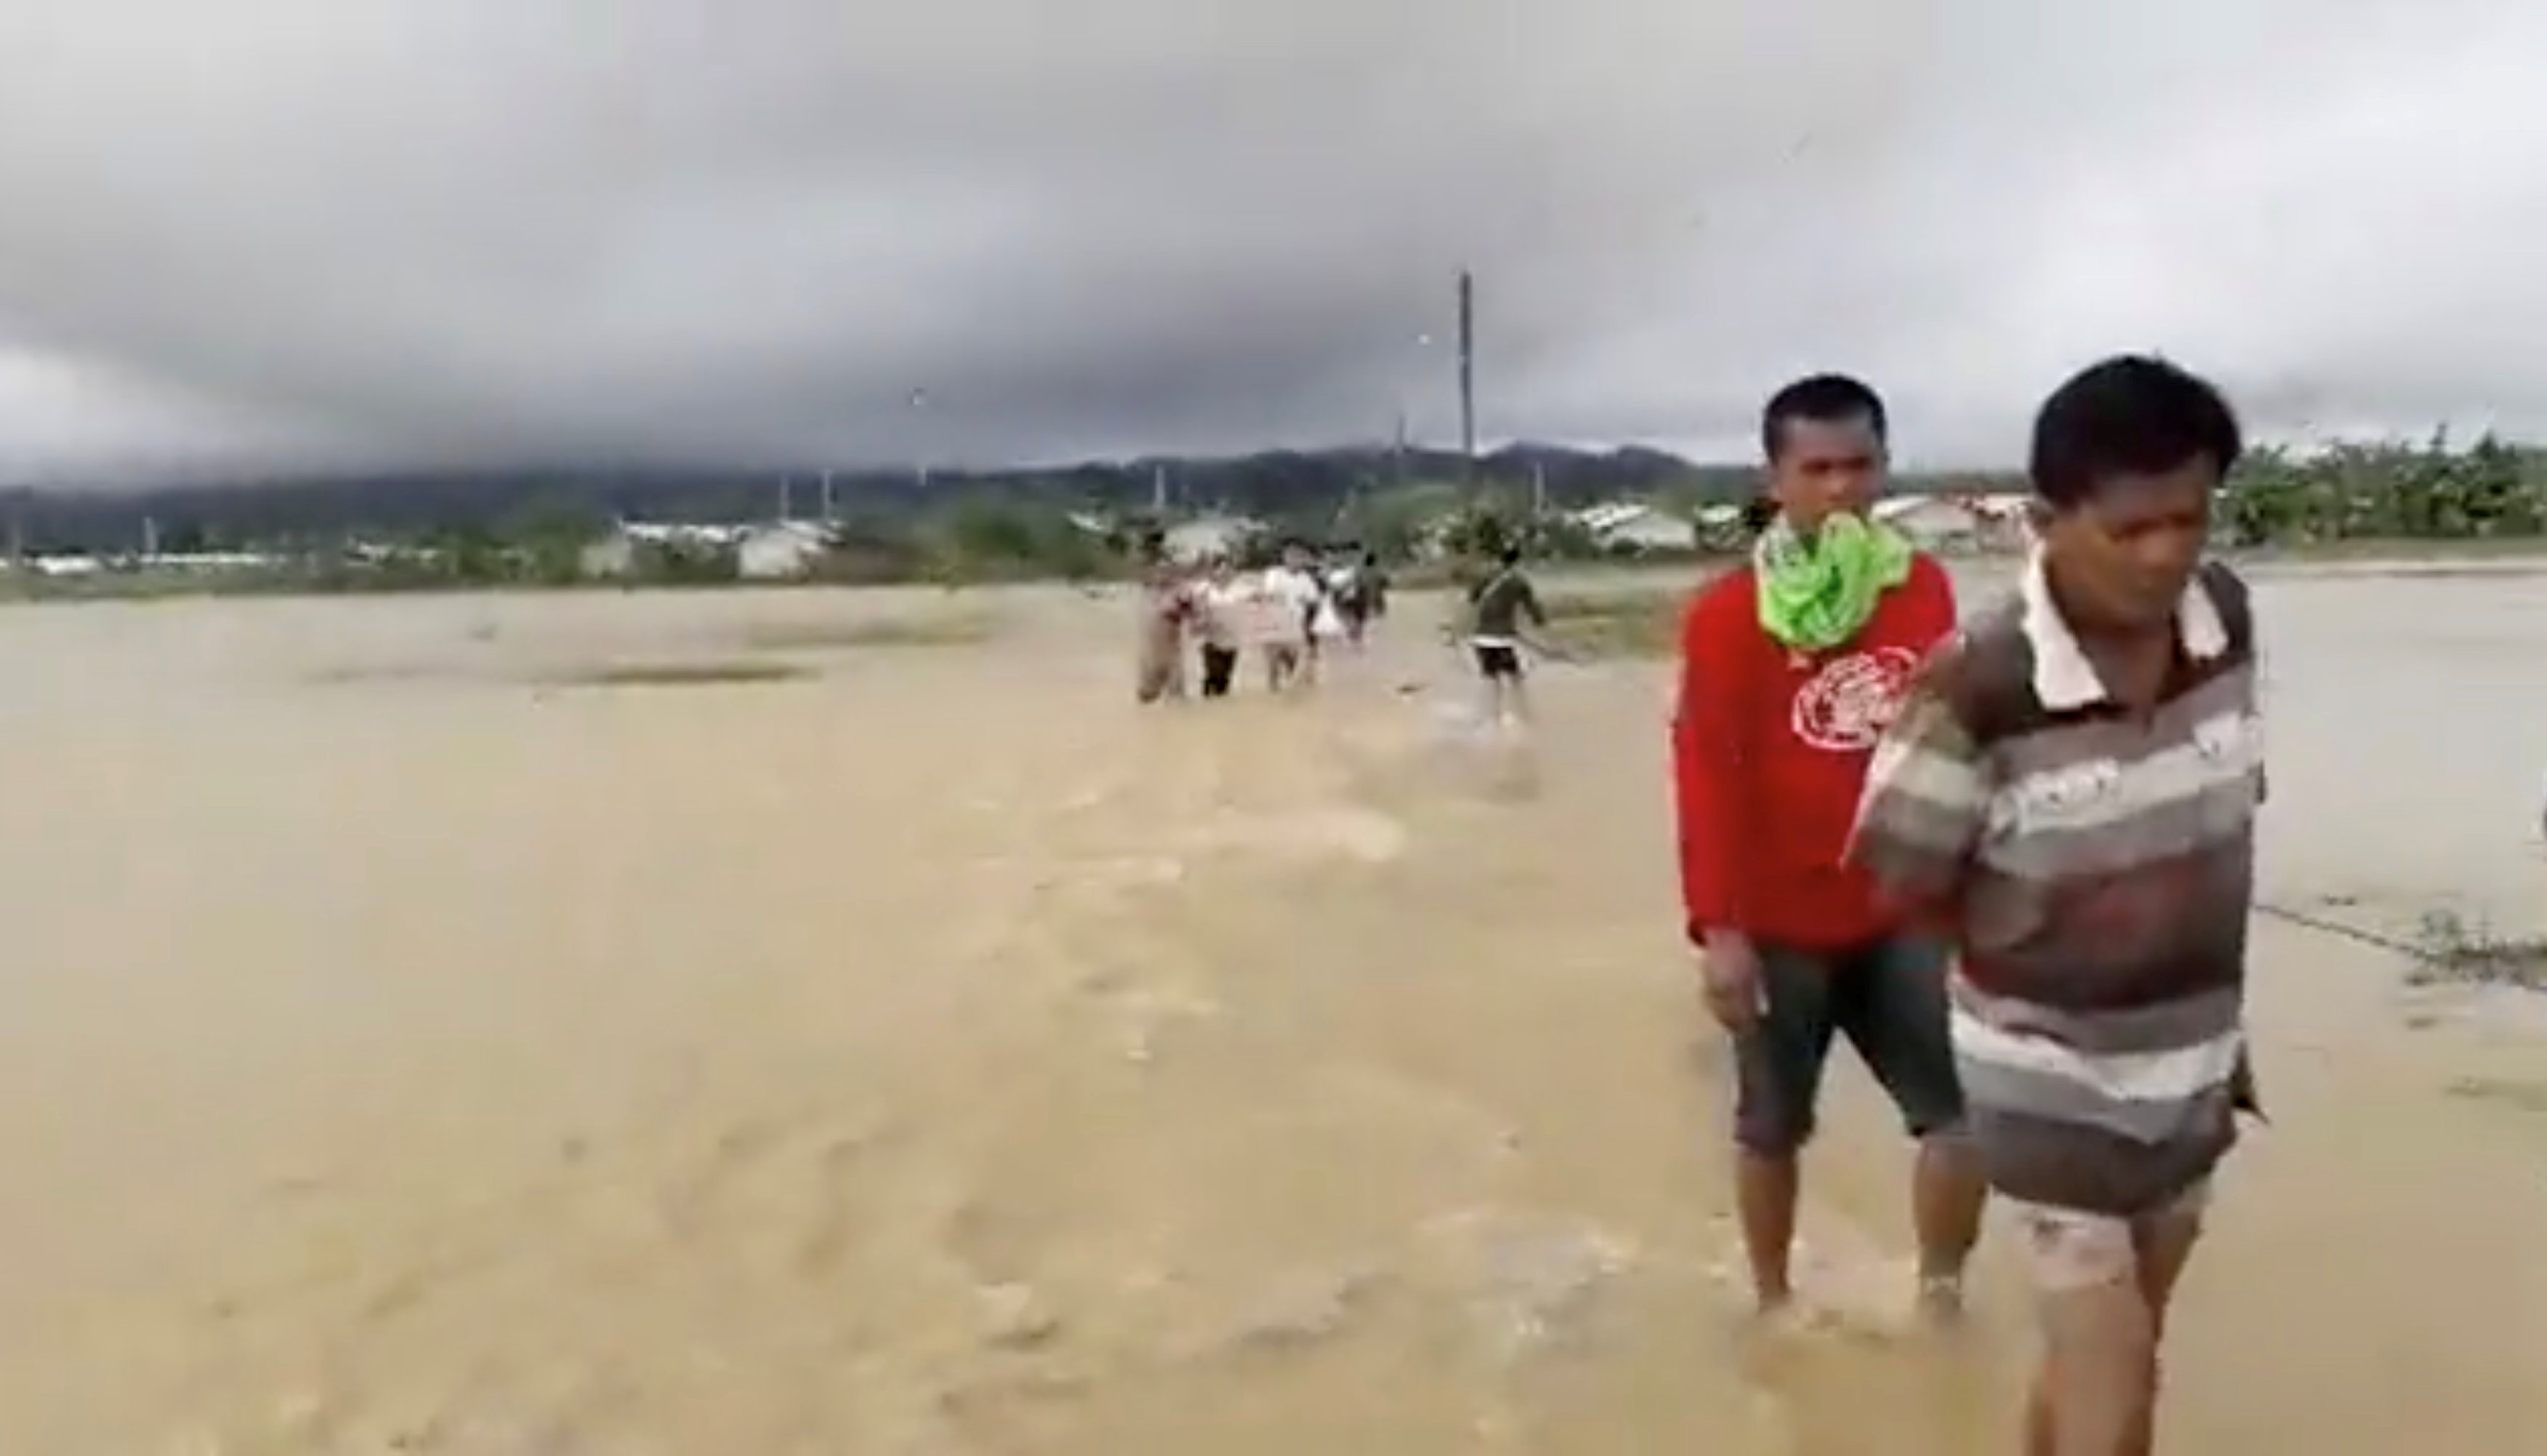 In pictures: Philippine storm triggers floods, landslides